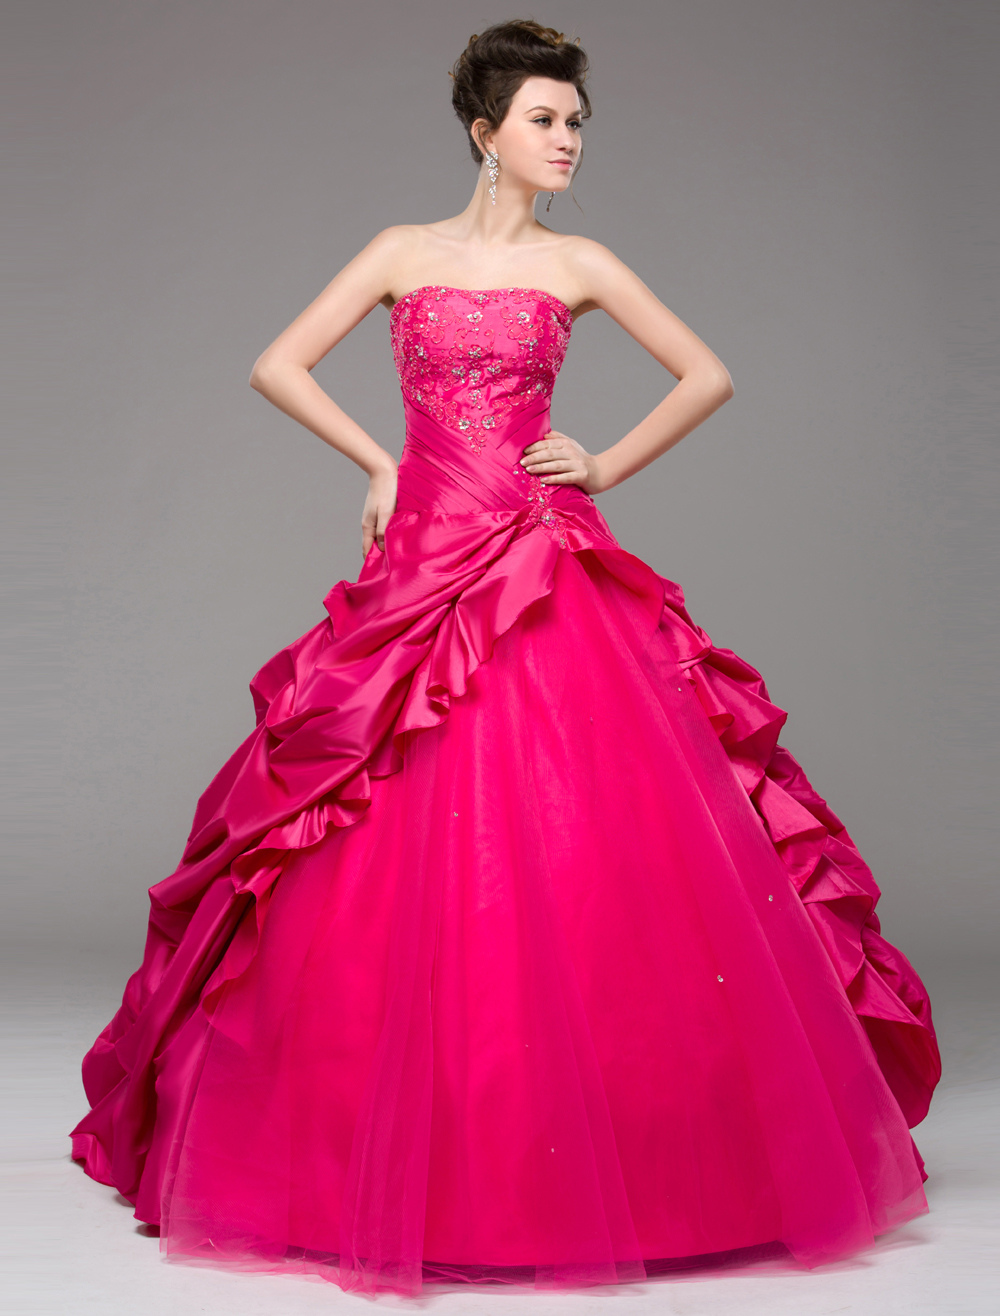 Ball Gown Prom Dress Hot Pink Taffeta Strapless Occasion Dress Beading Ruffle Floor Length Pageant Dress (Wedding Prom Dresses) photo